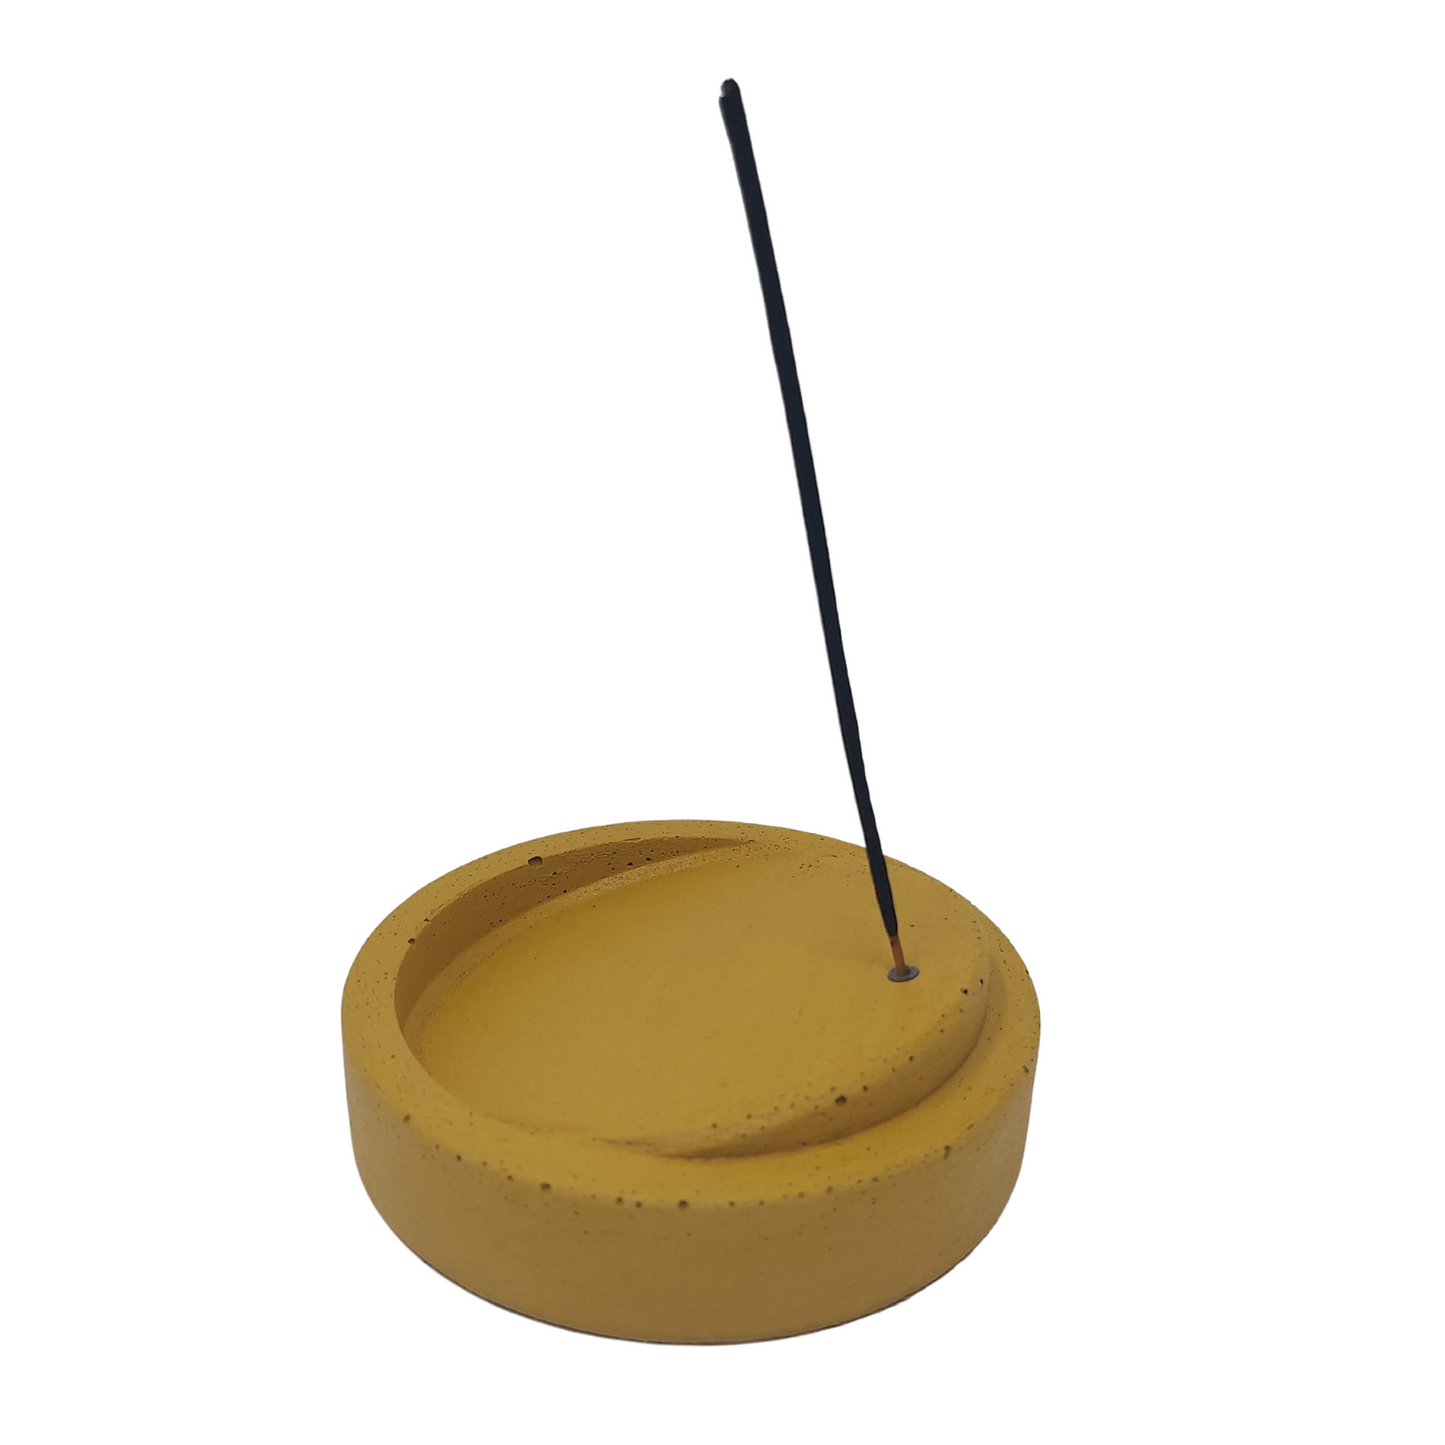 5"x1" Incense Holder | Concrete Round Diagonal